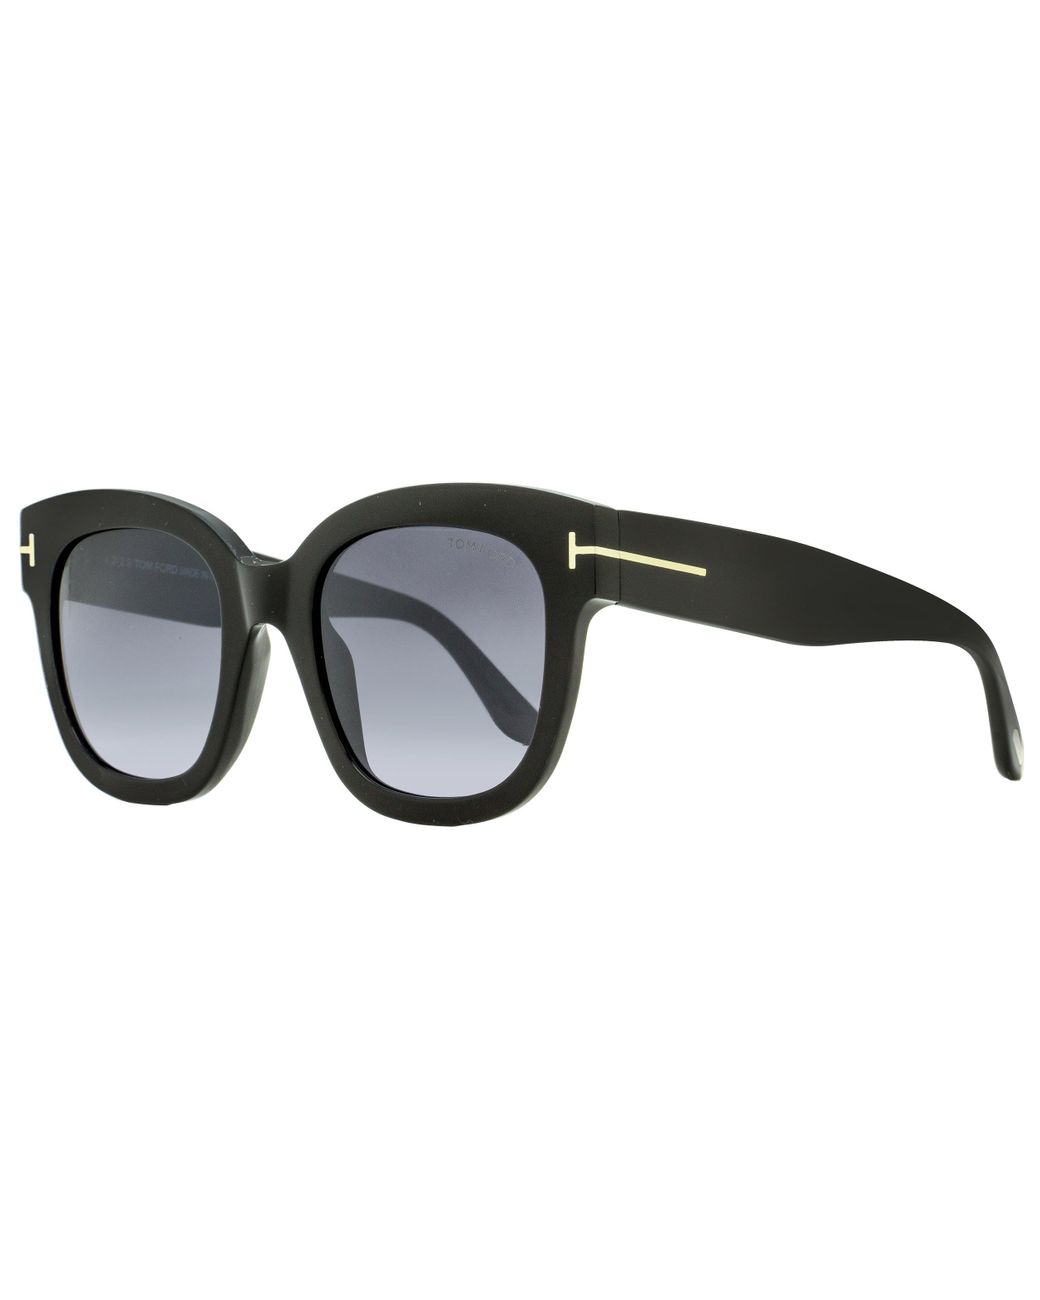 Tom Ford Square Sunglasses Tf613 Beatrix-02 Black 52mm | Lyst